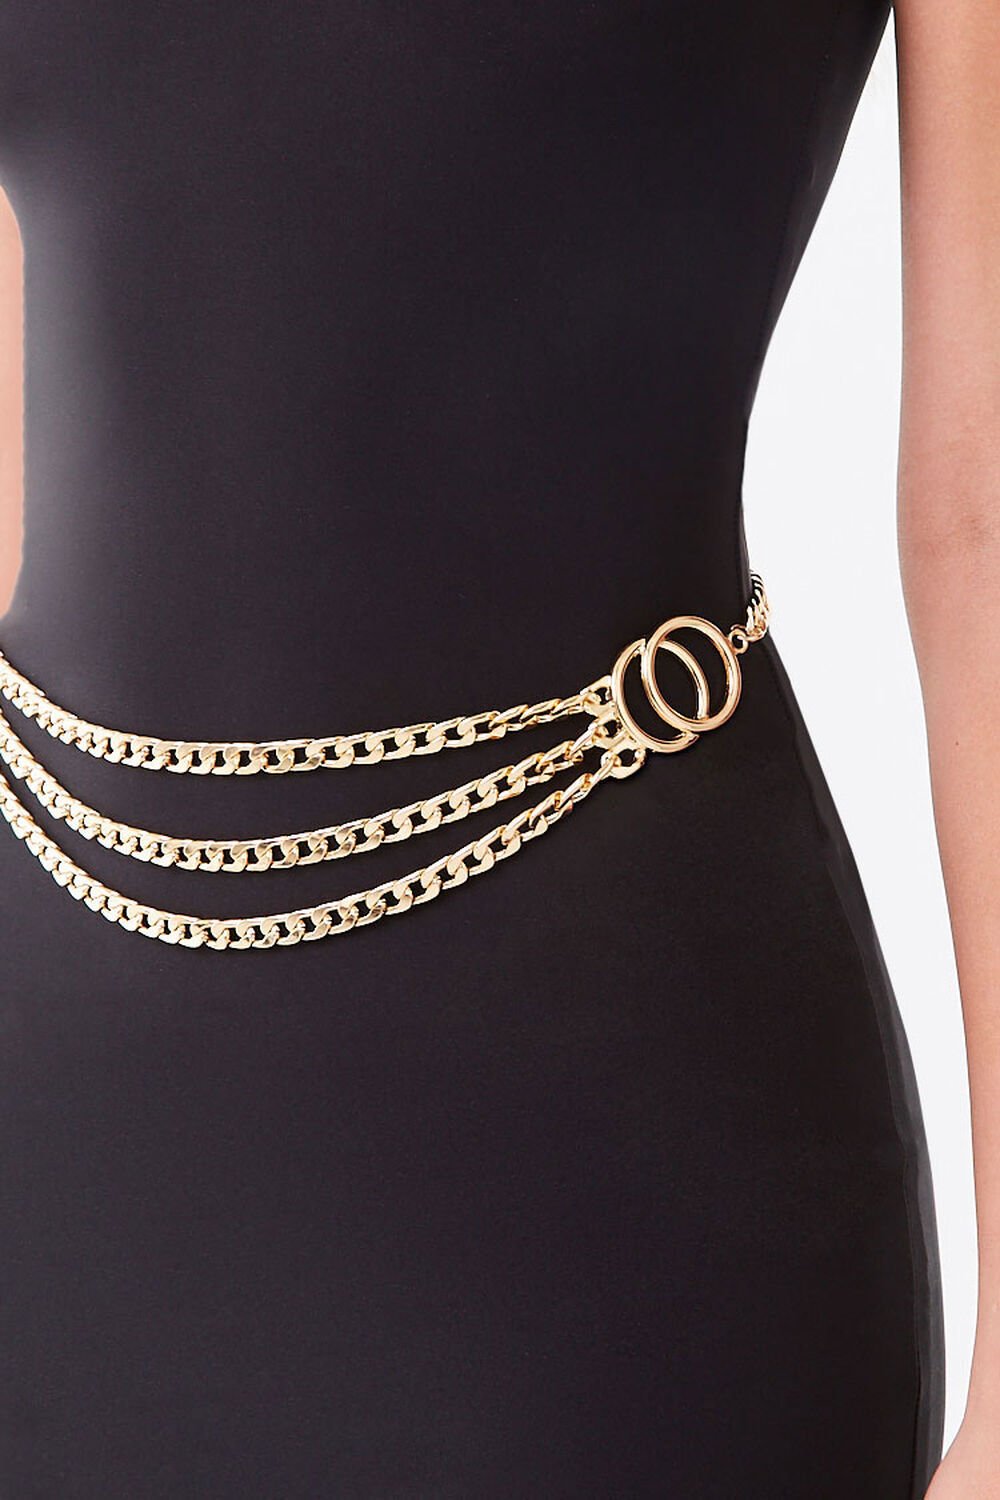 O-Ring Curb Chain Waist Belt, image 1